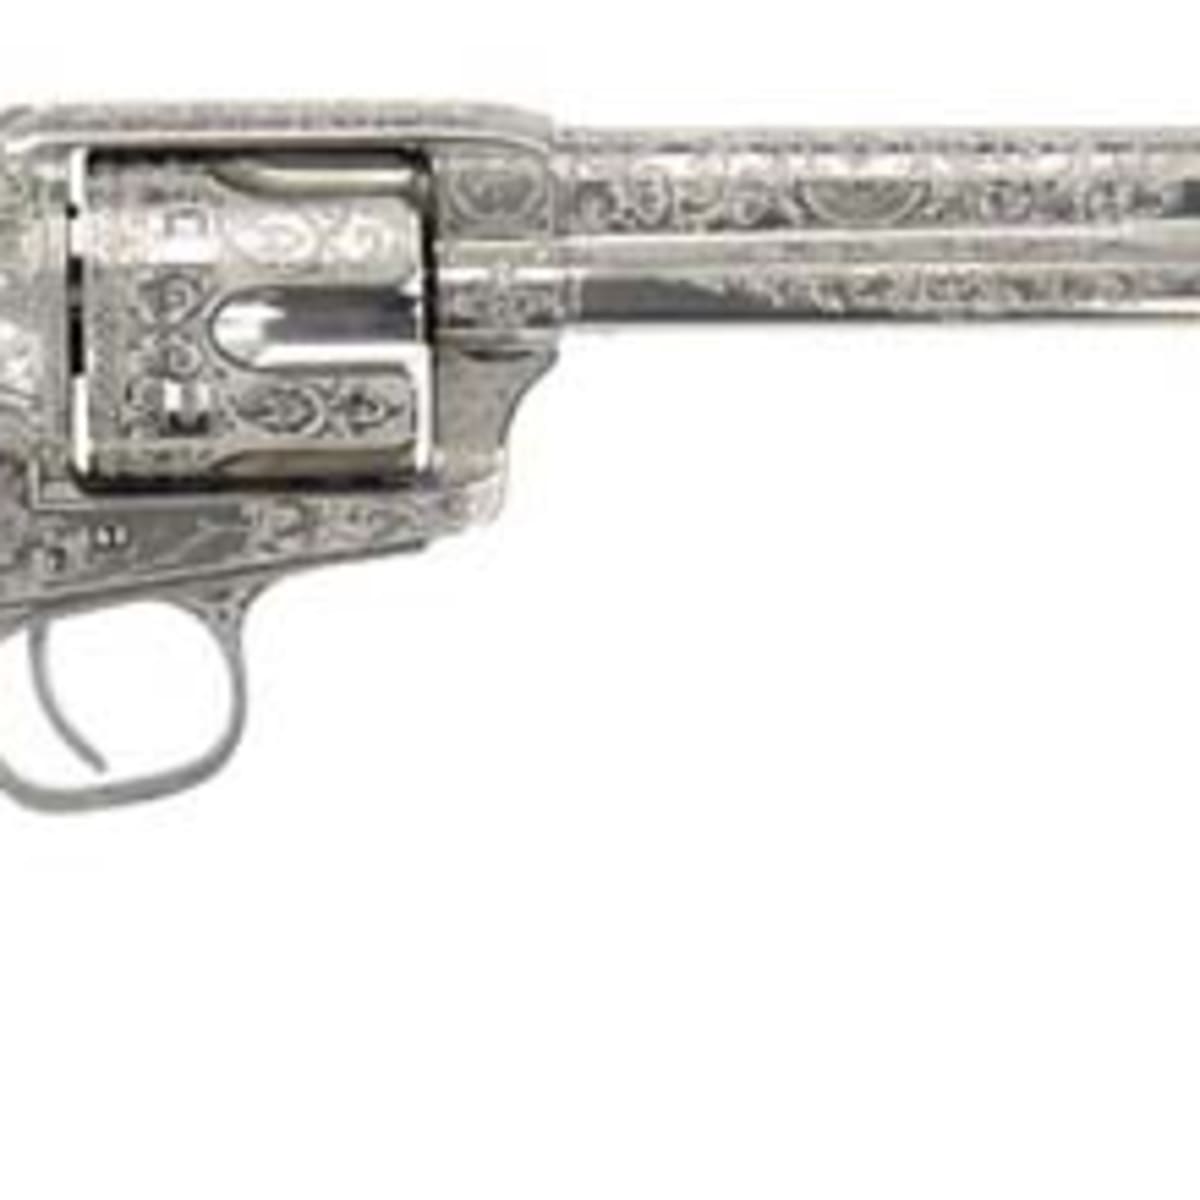 Rare Colt revolver sells for $747,500 - Military Trader/Vehicles